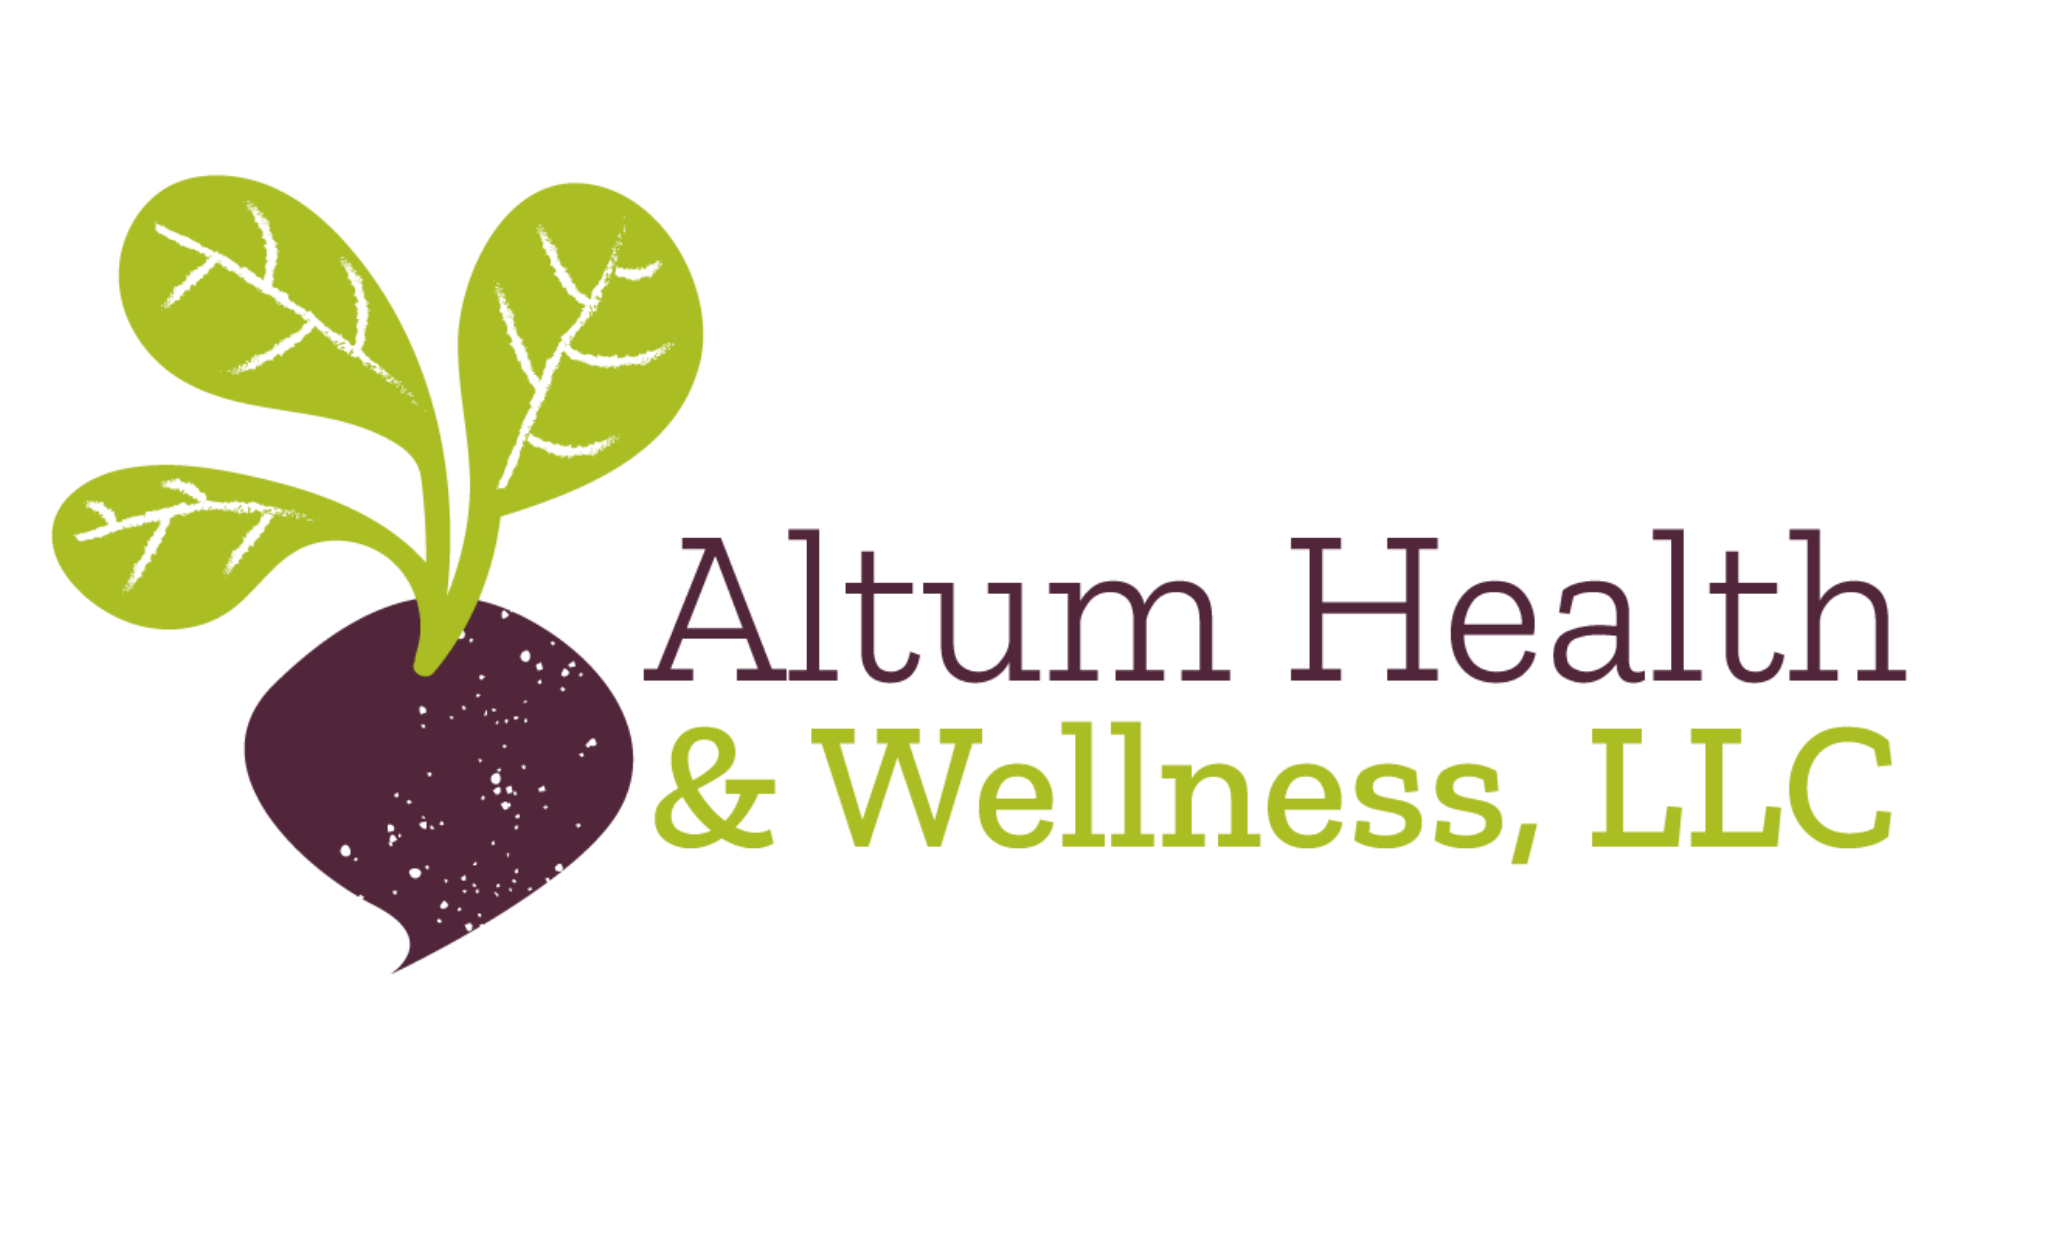 ALTUM Health & Wellness